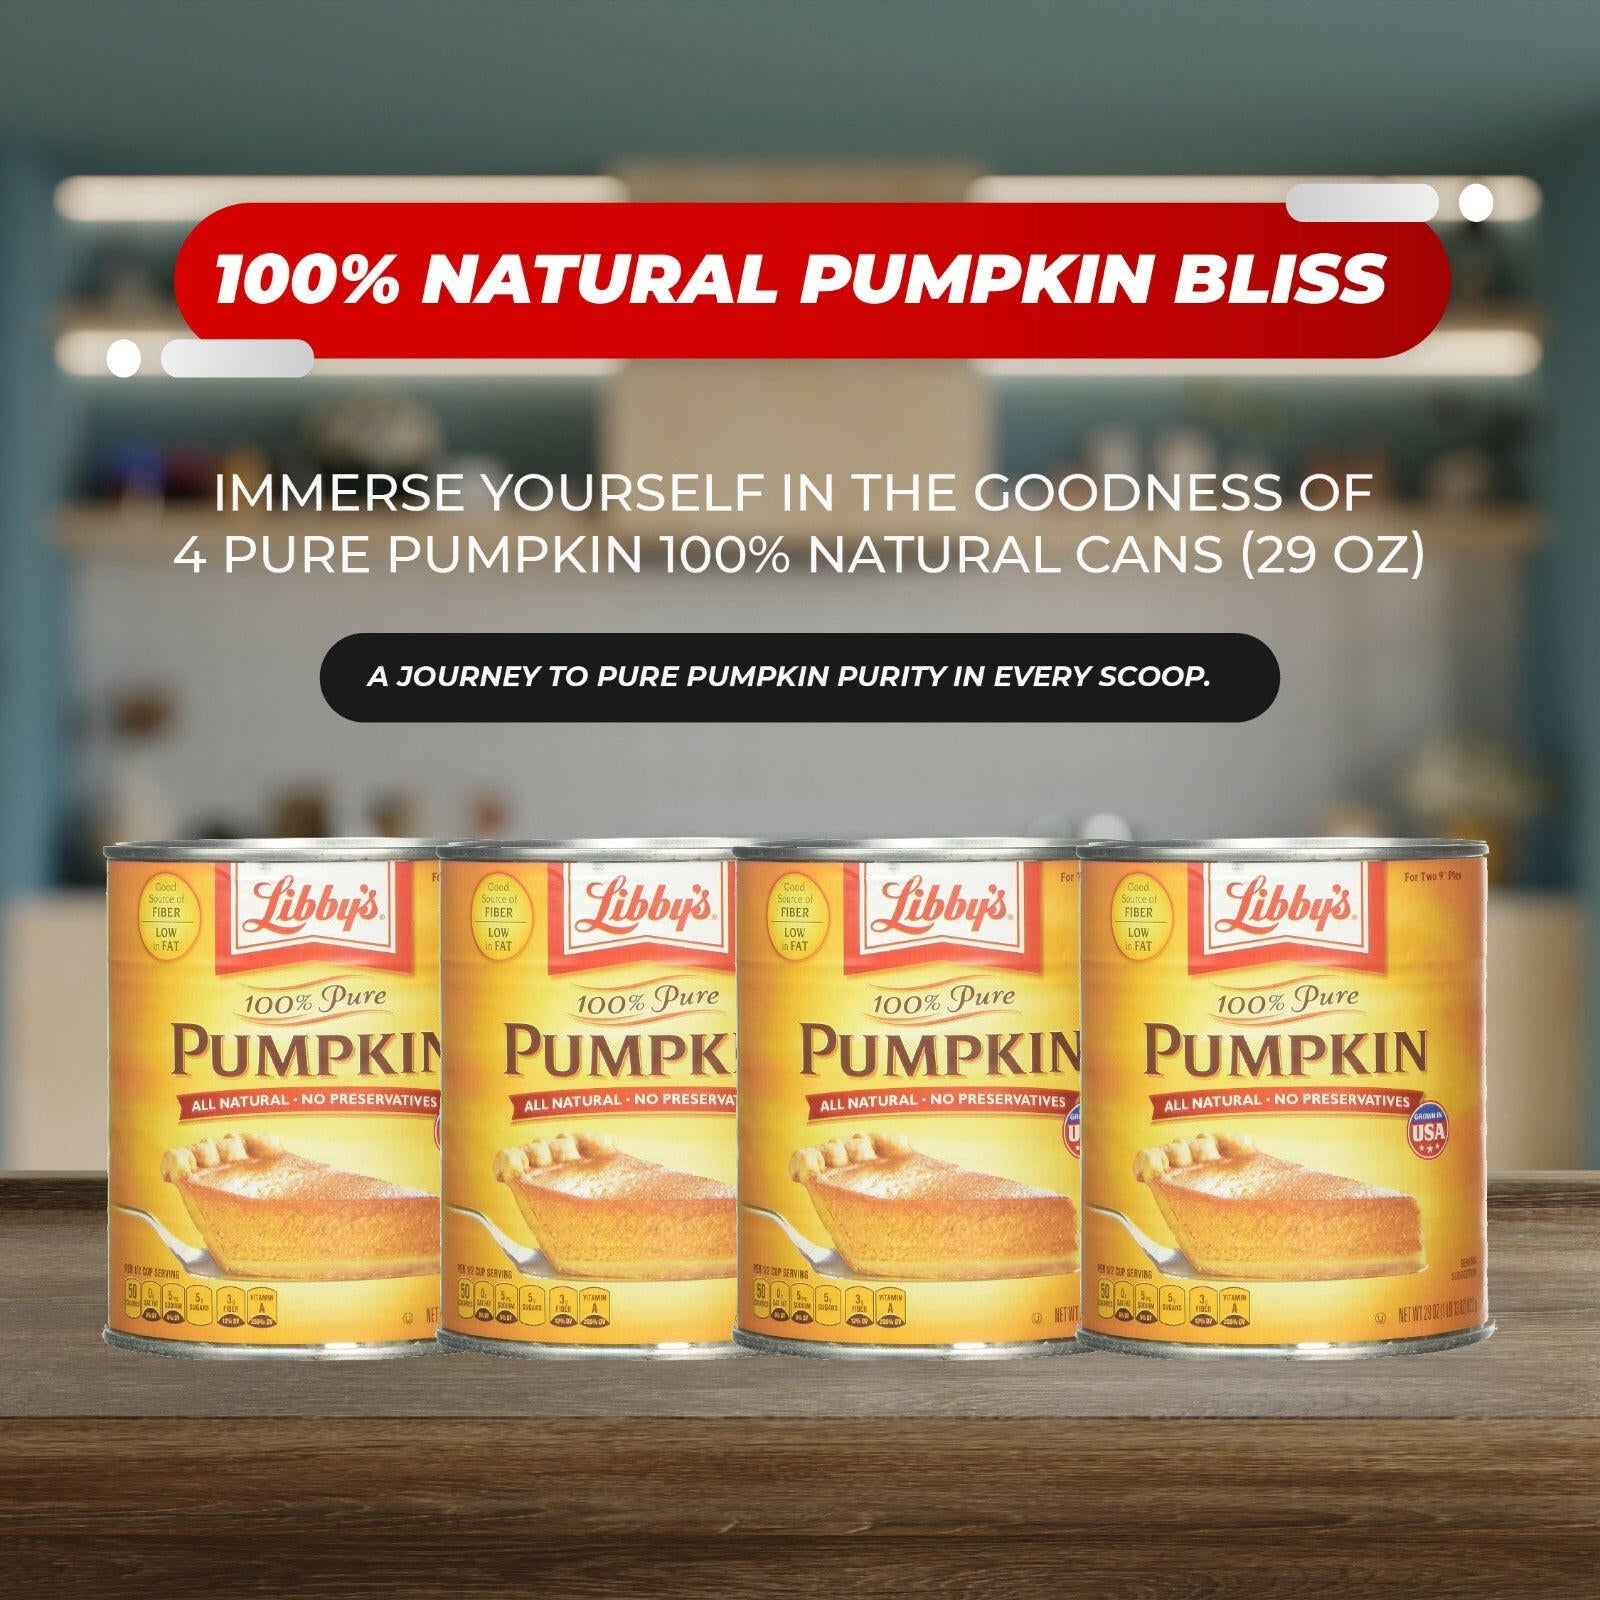 4 Libby's Pure Pumpkin 100% Natural, 29 oz + 4 Catsa Essentials Stirrers with Catsa Essentials Pack Box